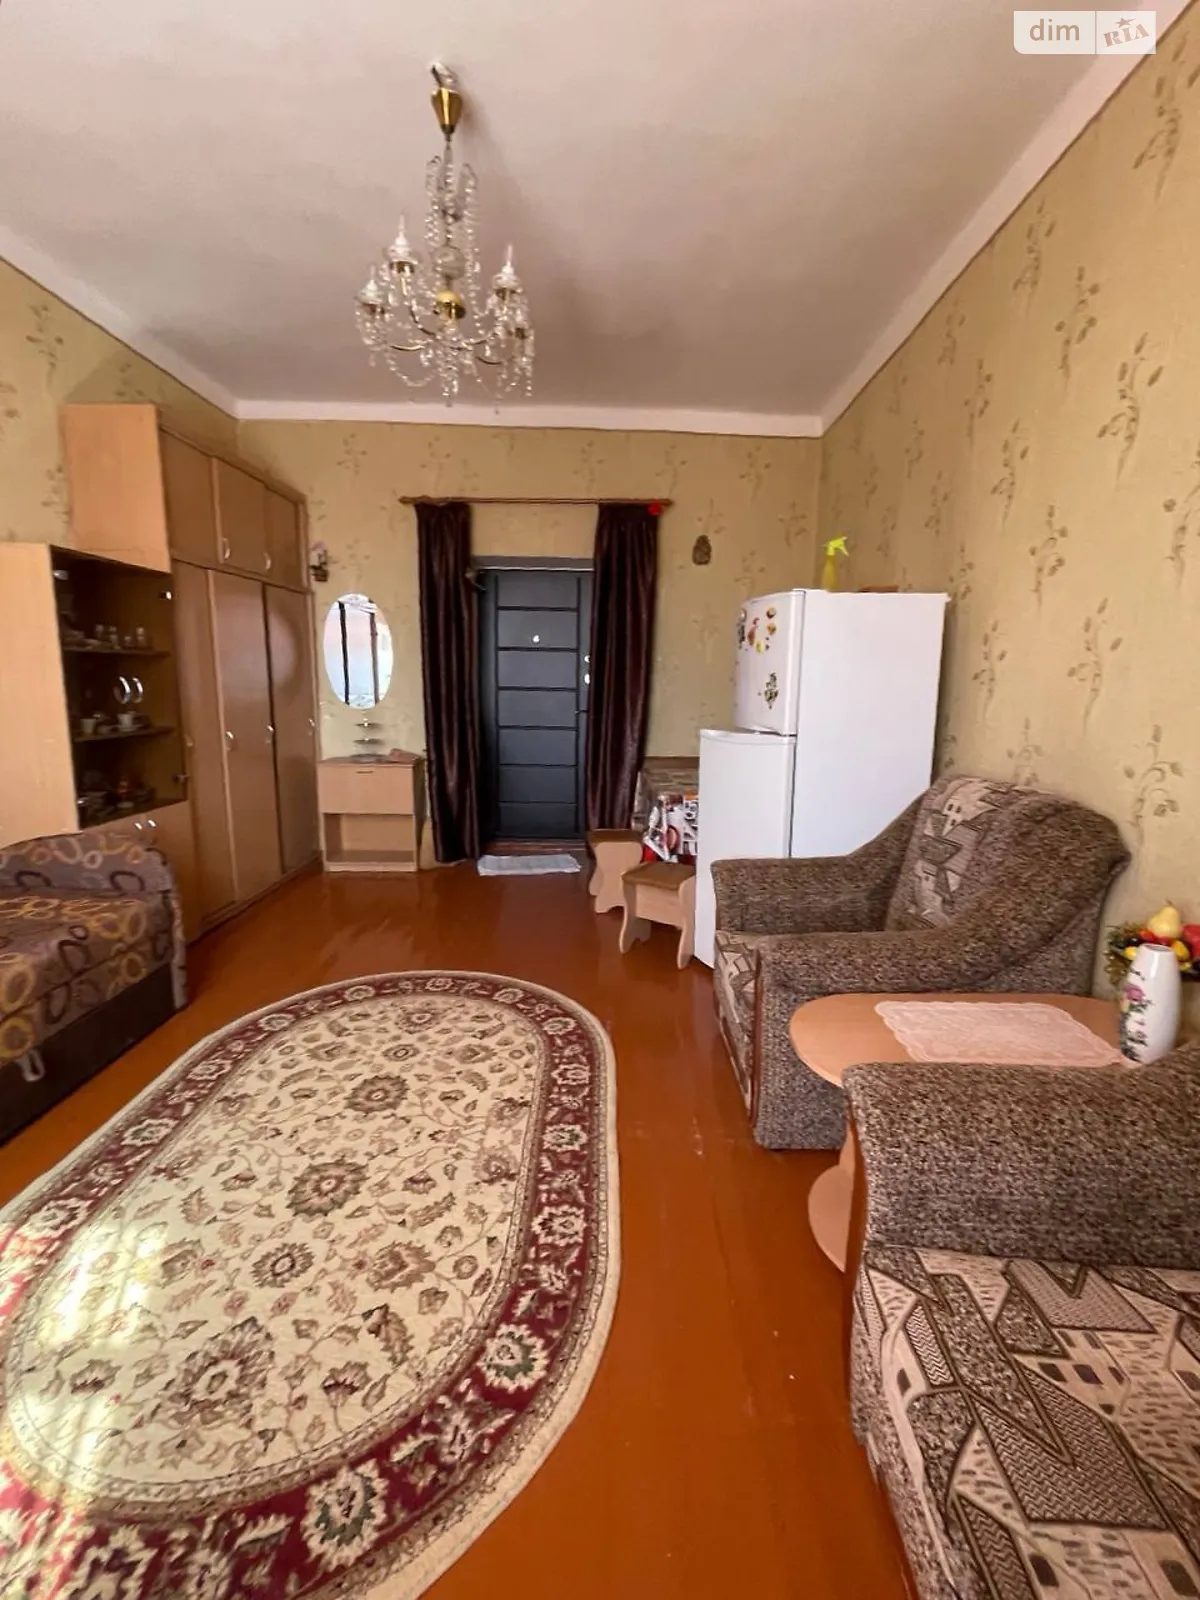 Продается комната 25 кв. м в Одессе, цена: 10000 $ - фото 1